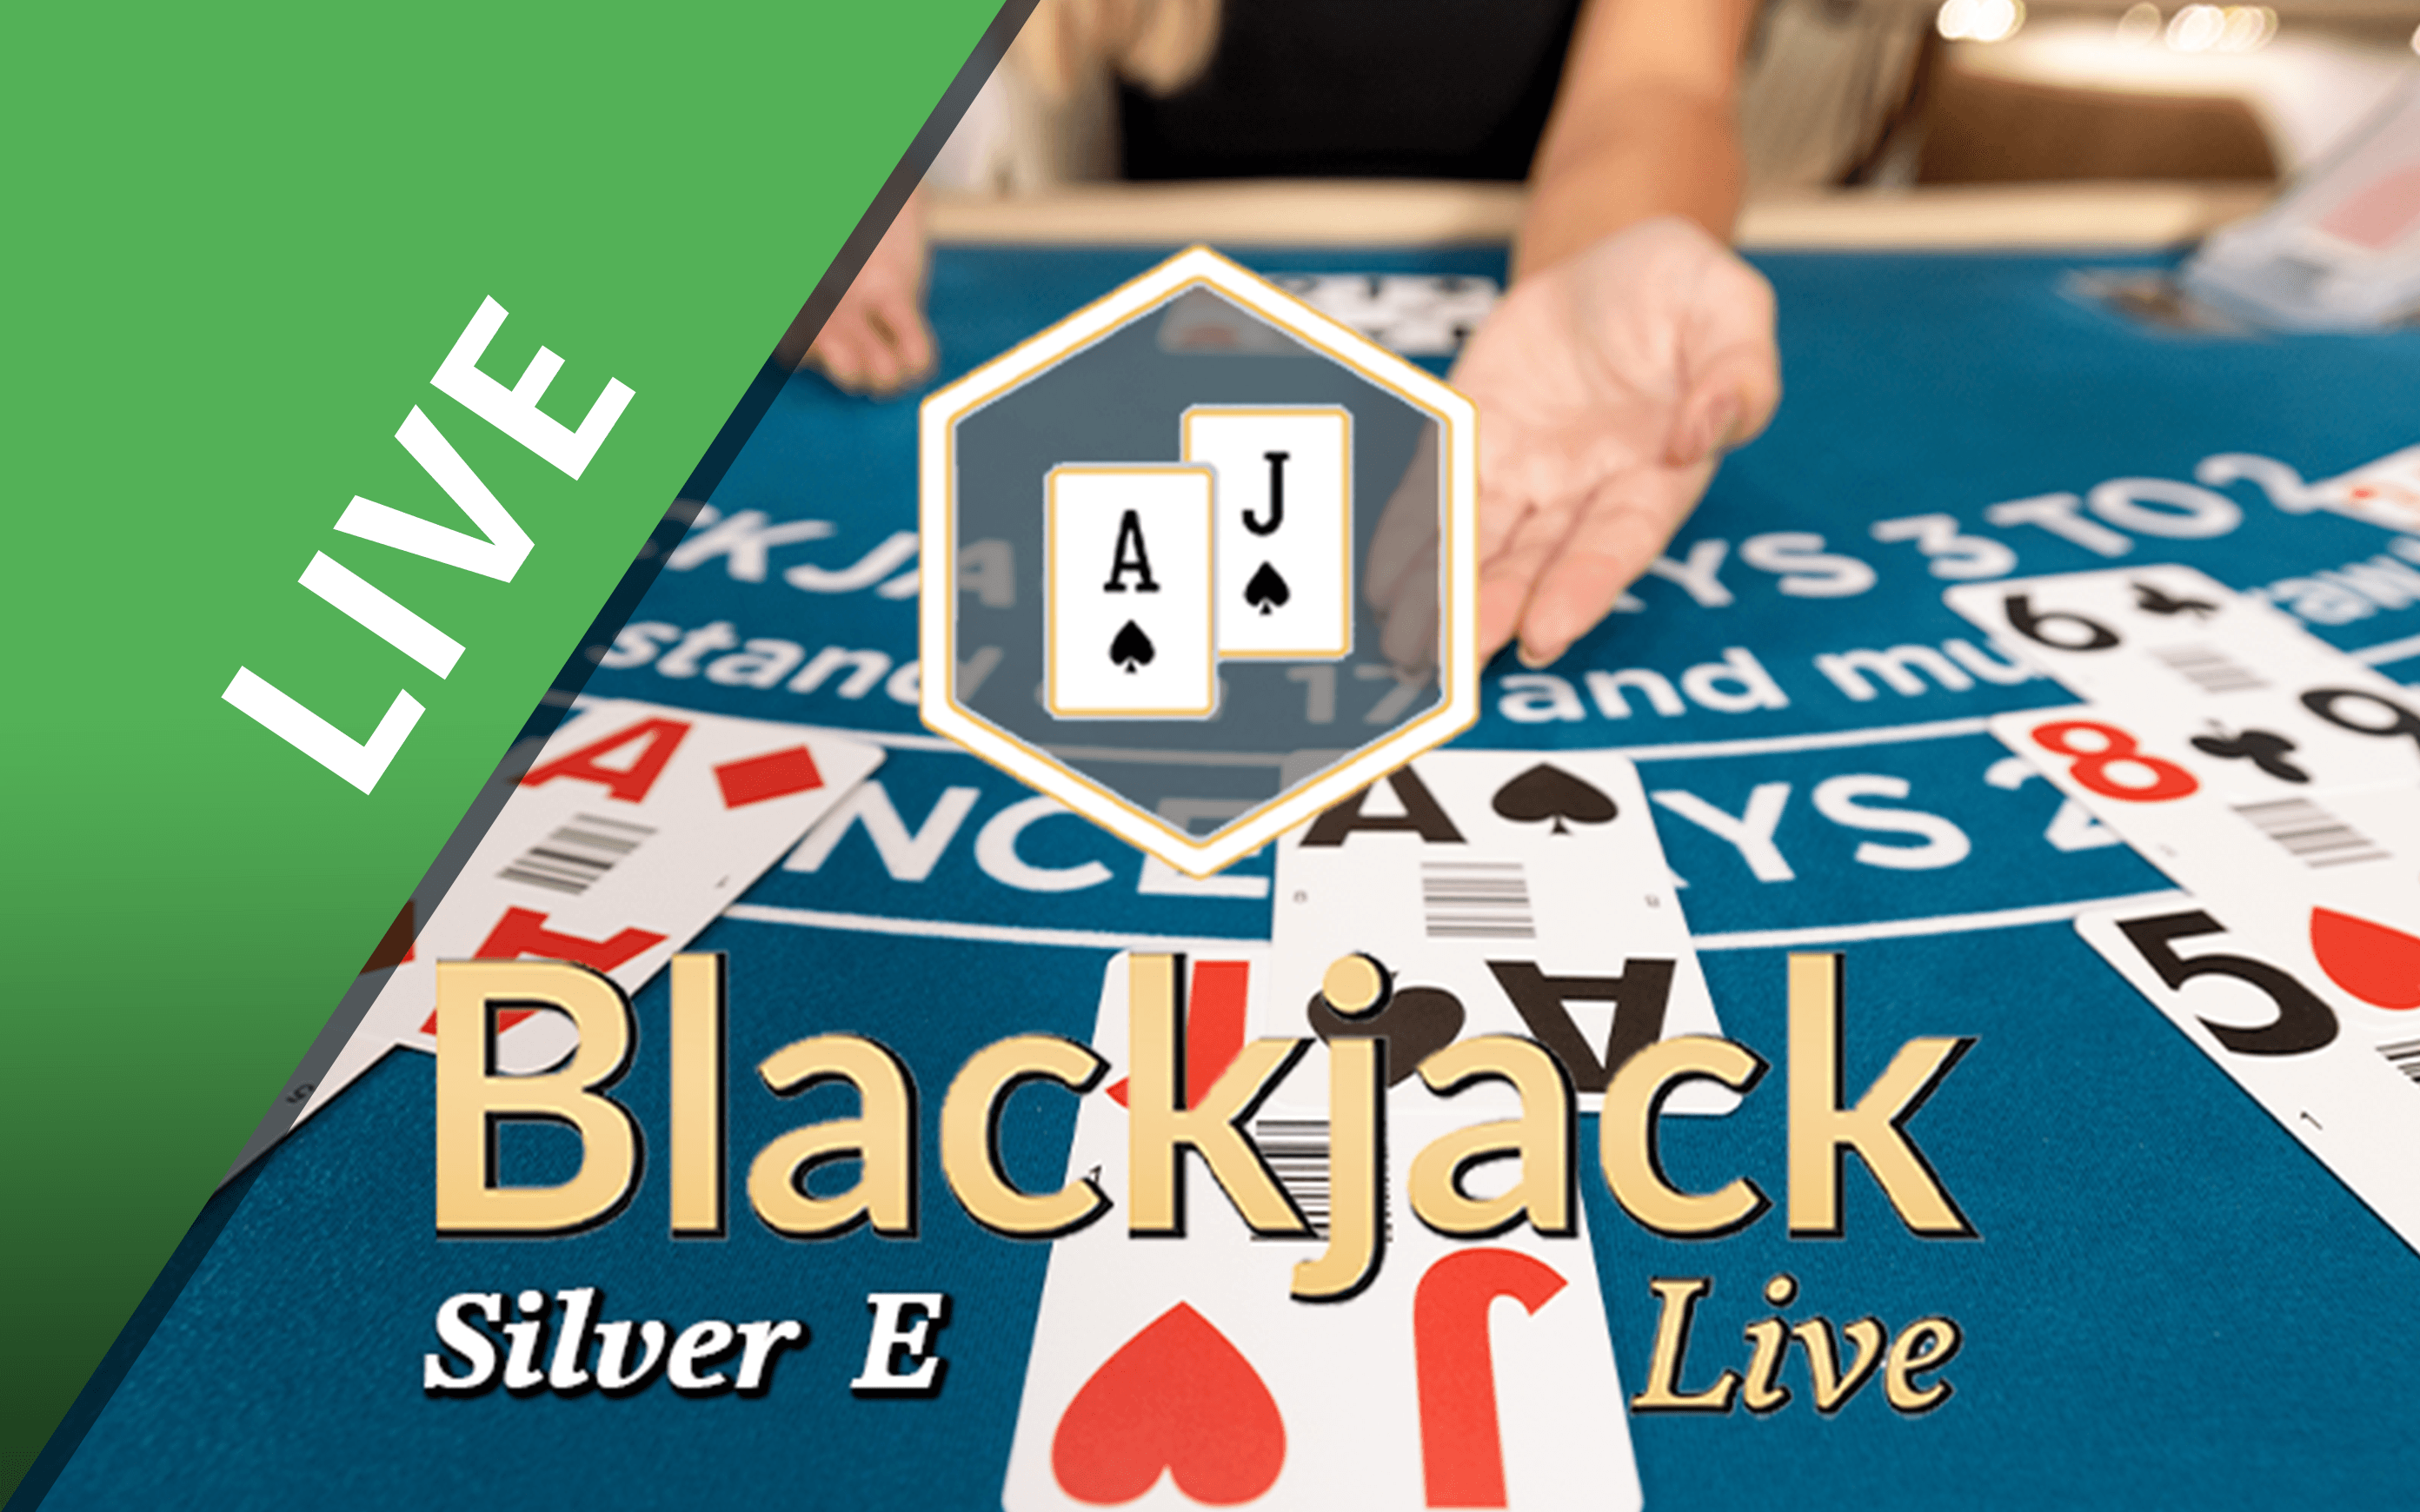 Jogue Blackjack Silver E no casino online Starcasino.be 